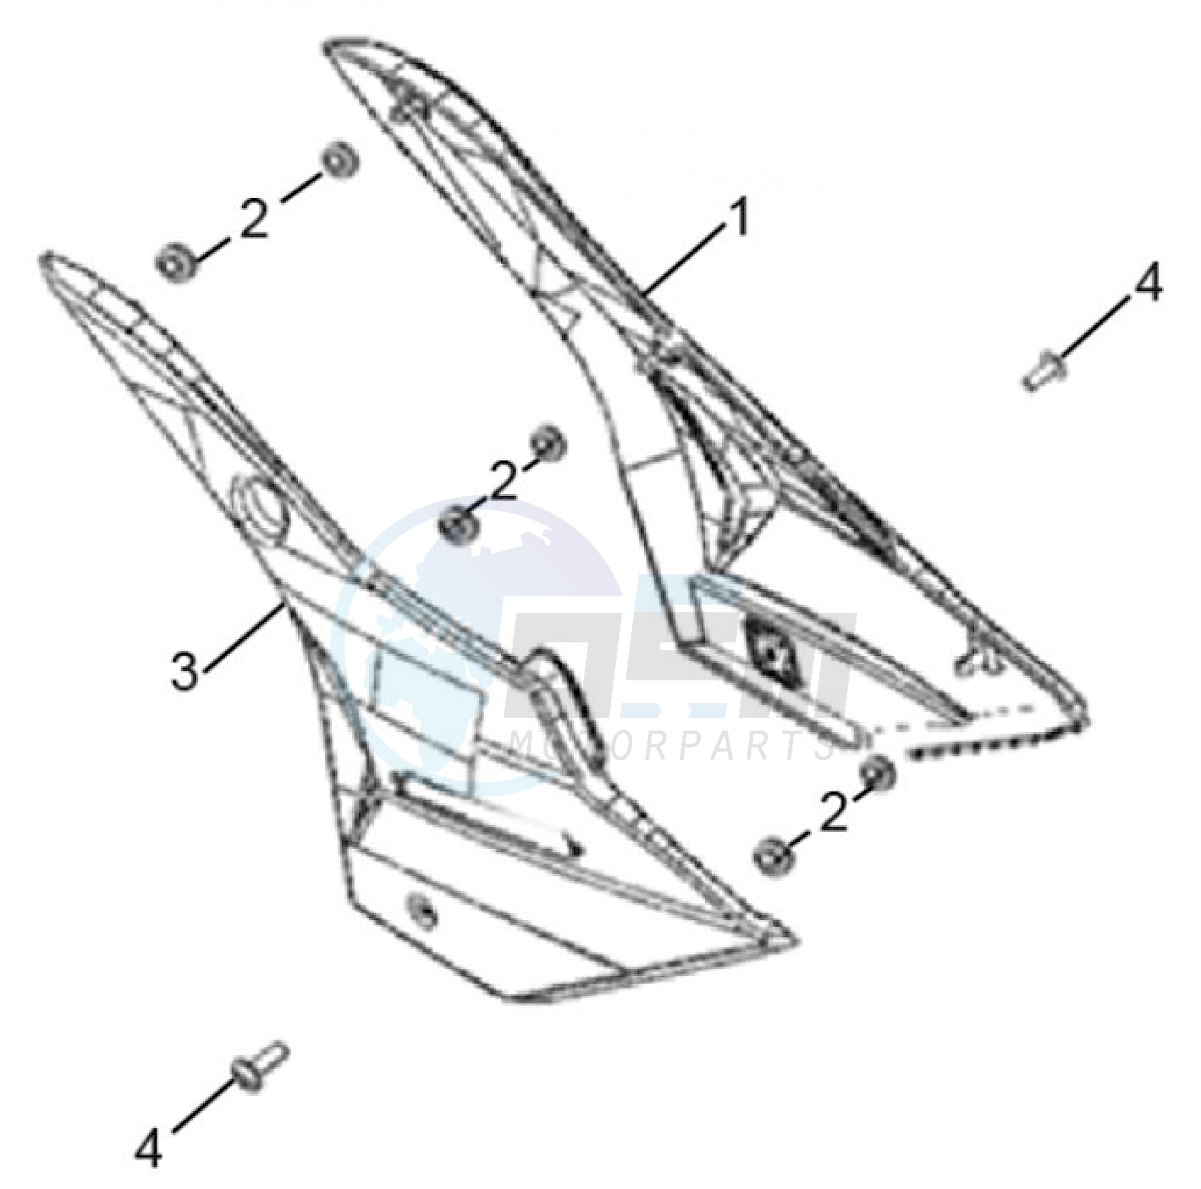 Rear fairing II (Positions) blueprint